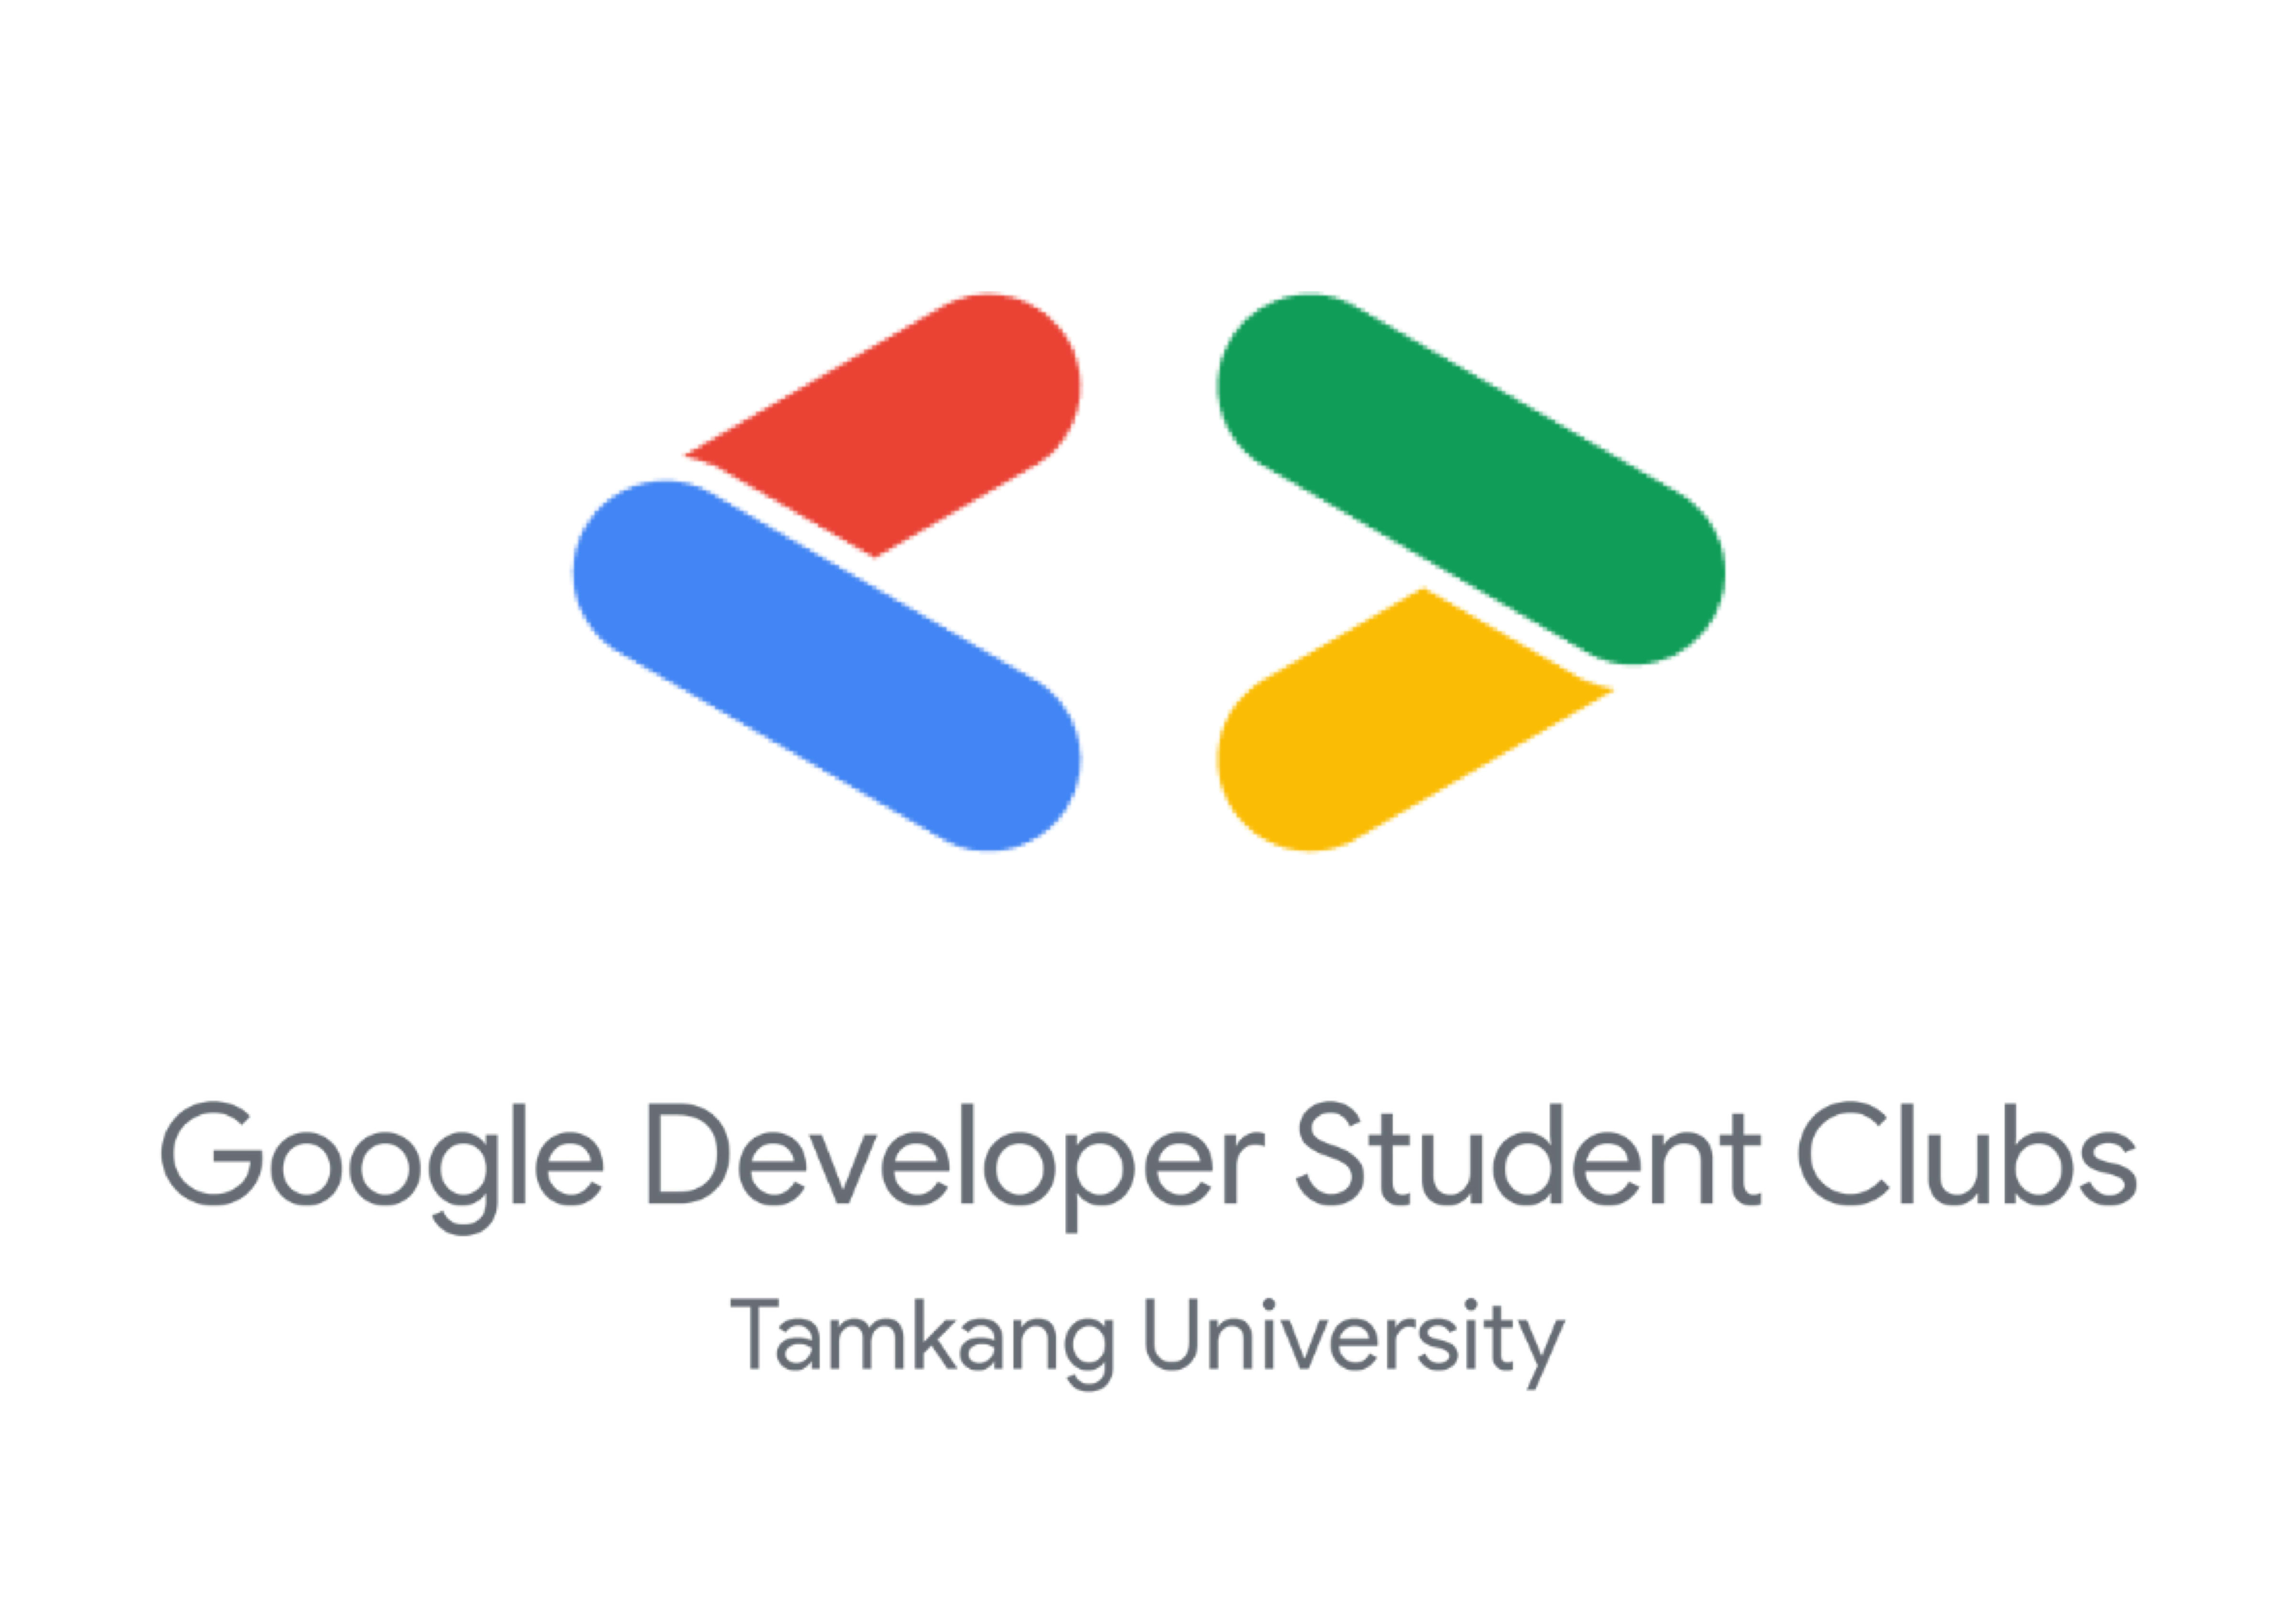 Google Developer Student Club Tamkang University logo